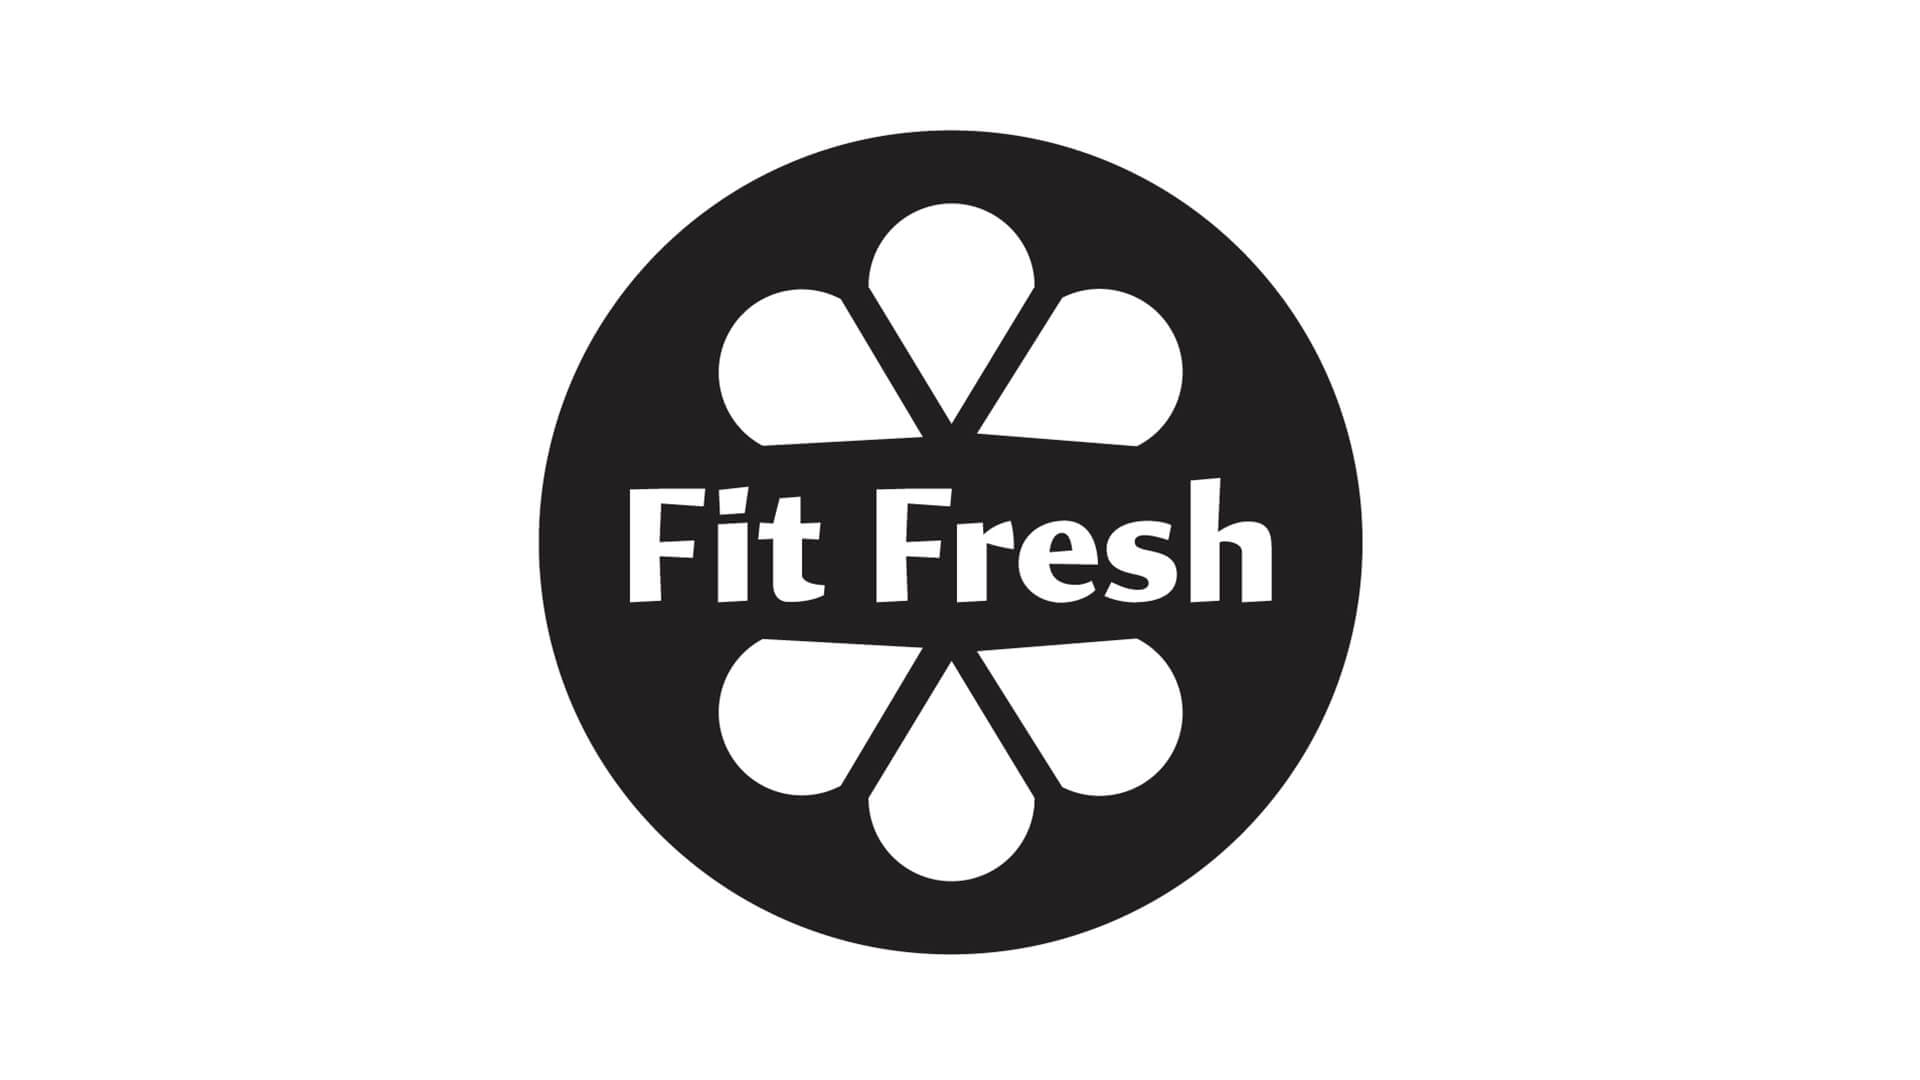 Fit & Fresh Inc.